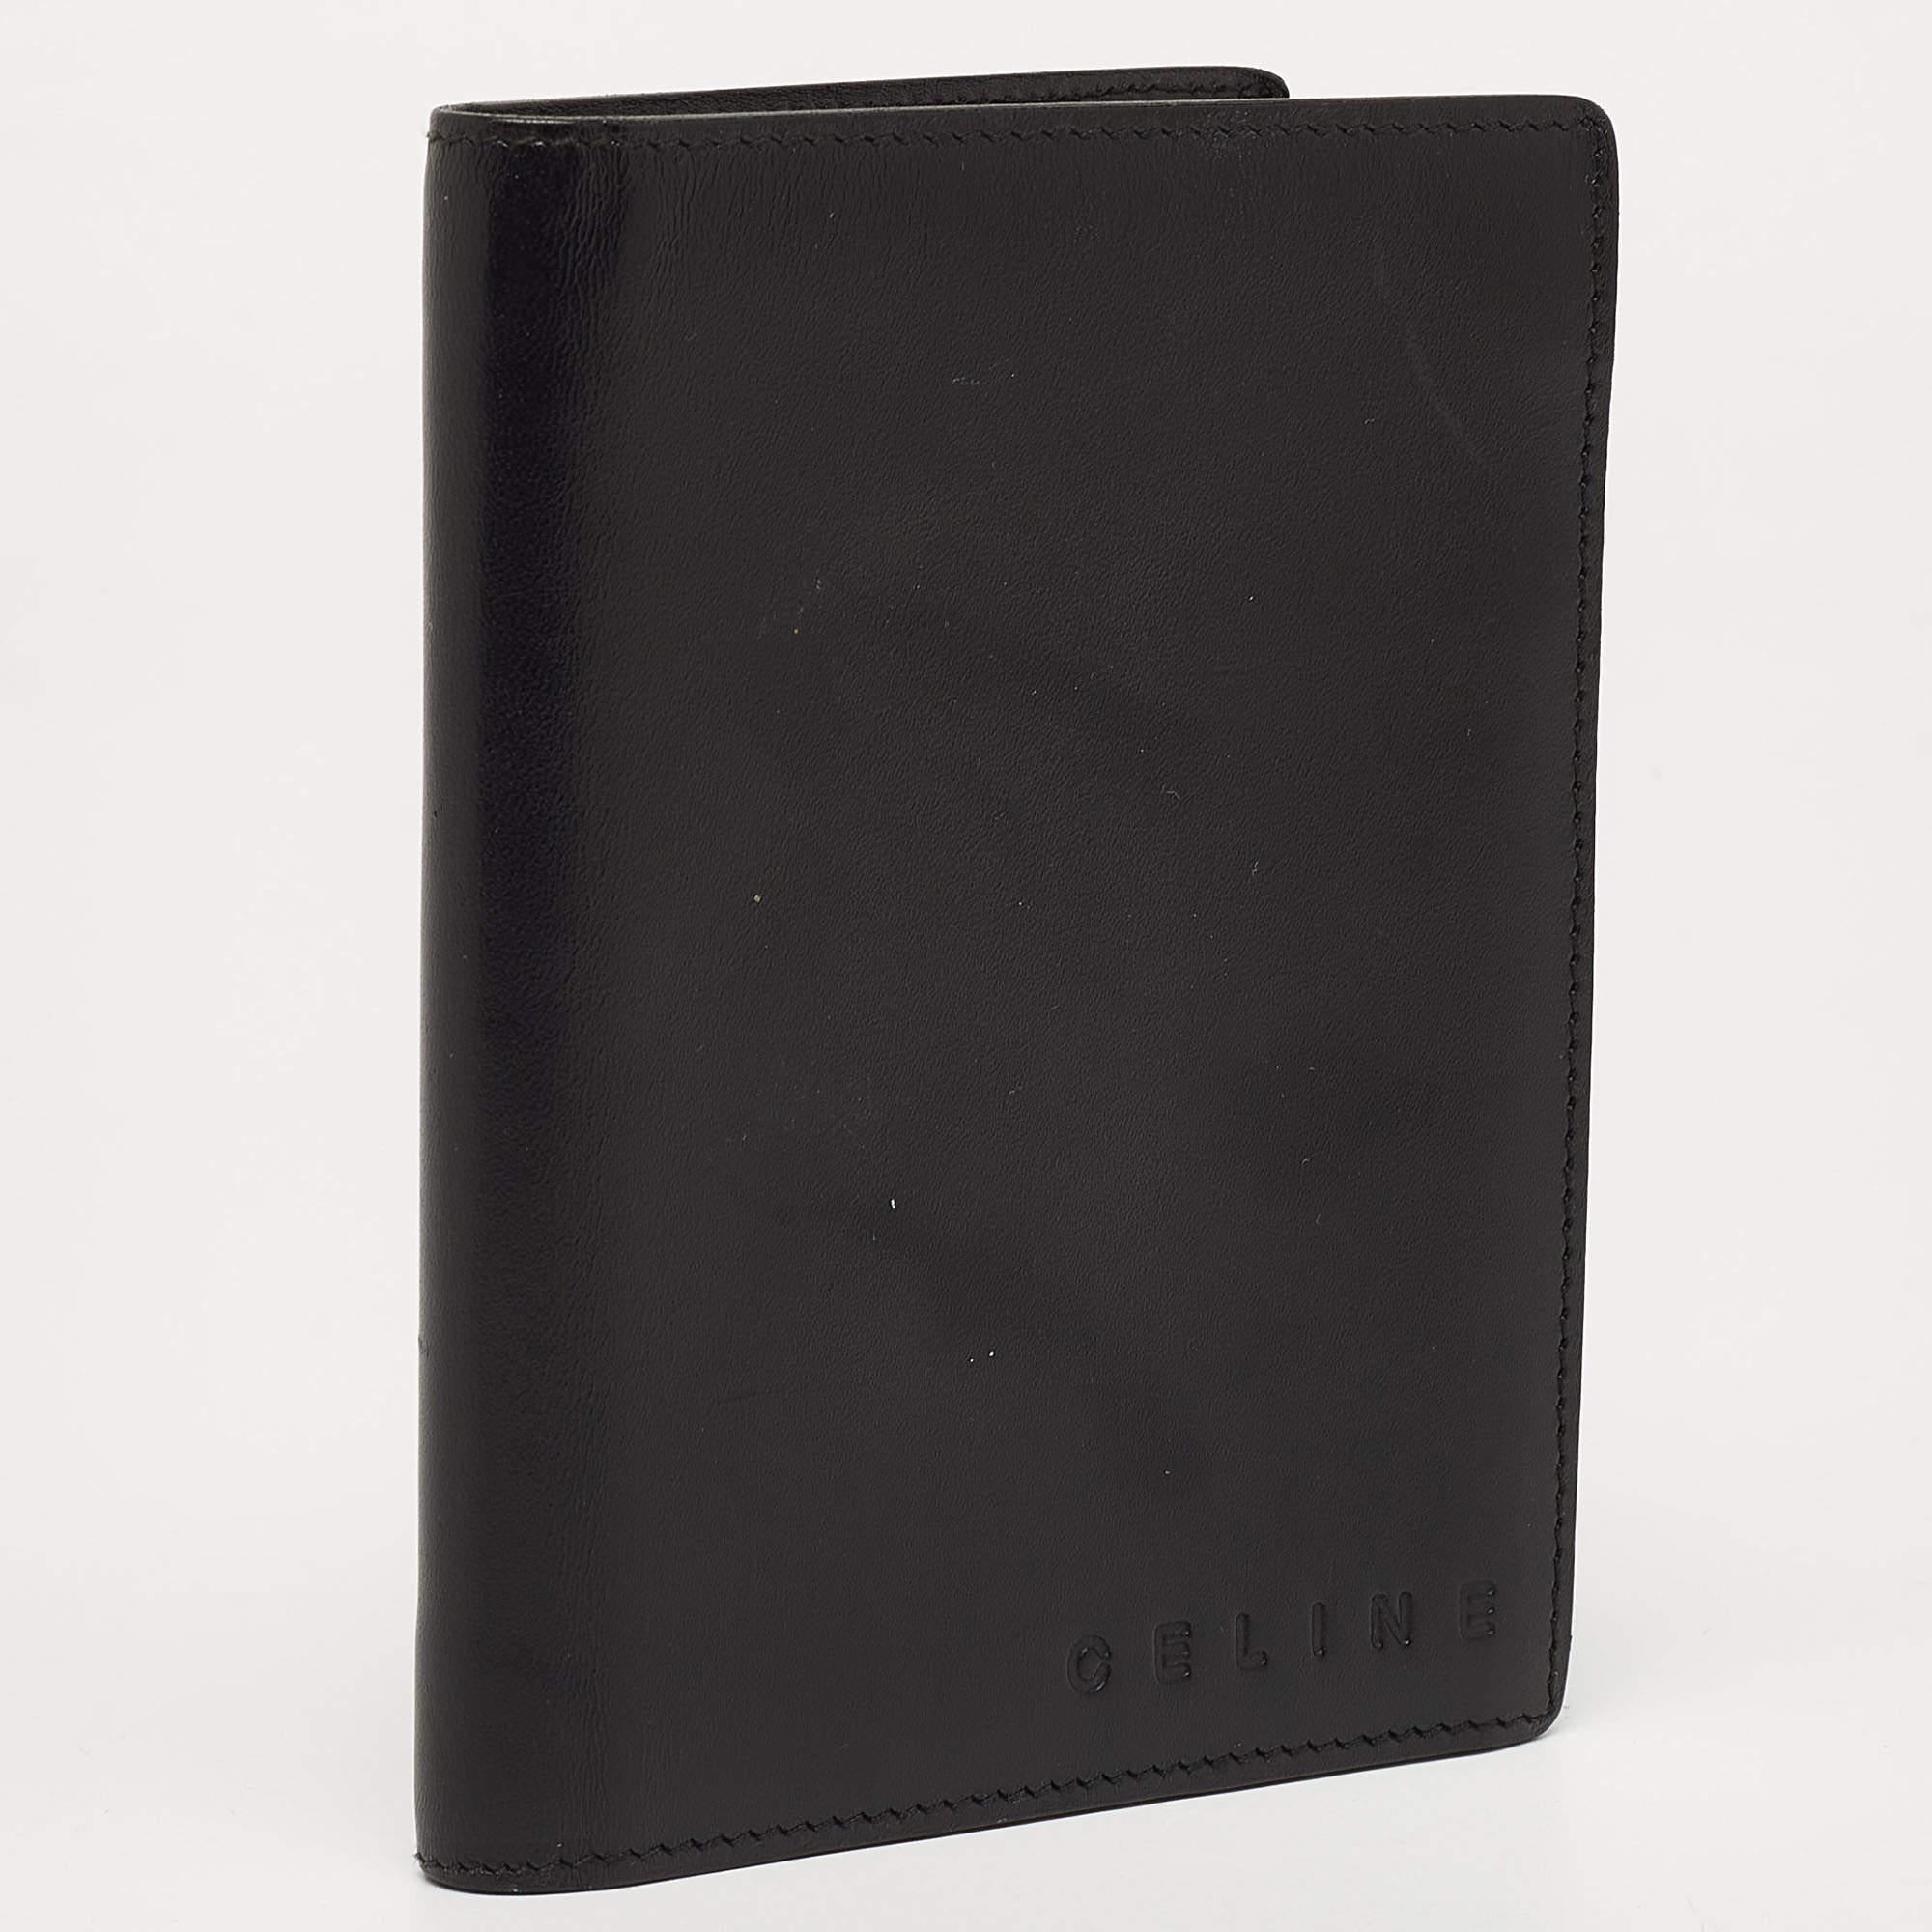 Celine Black Leather Compact Wallet For Sale 6